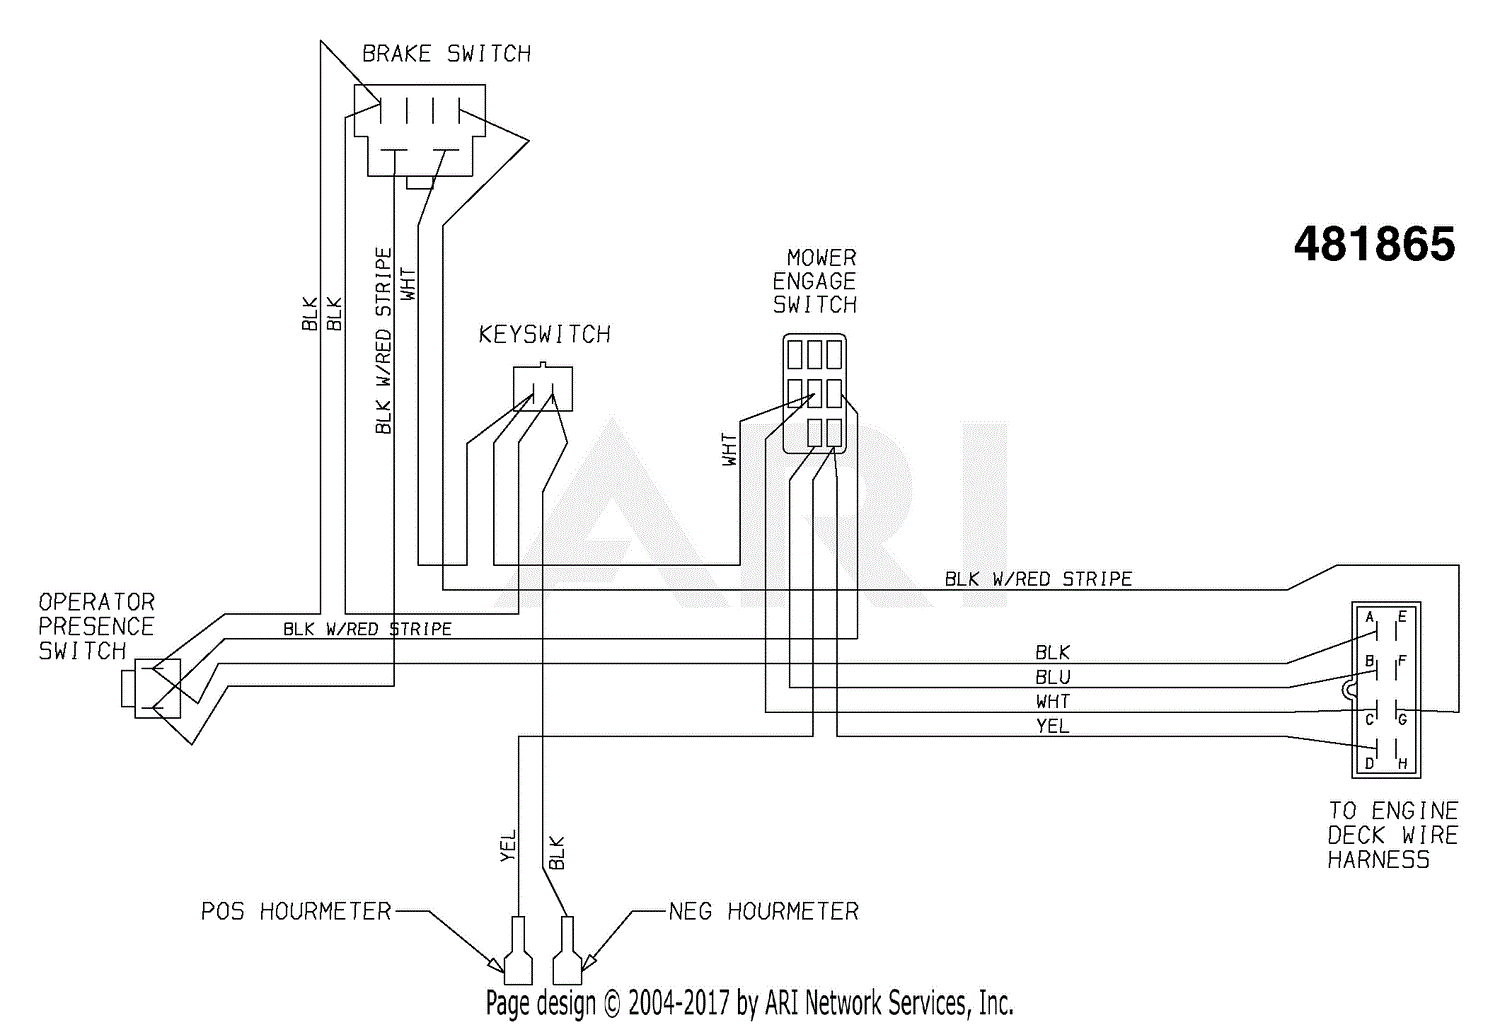 Scag Wiring Diagram Walk Behind - Wiring Diagram